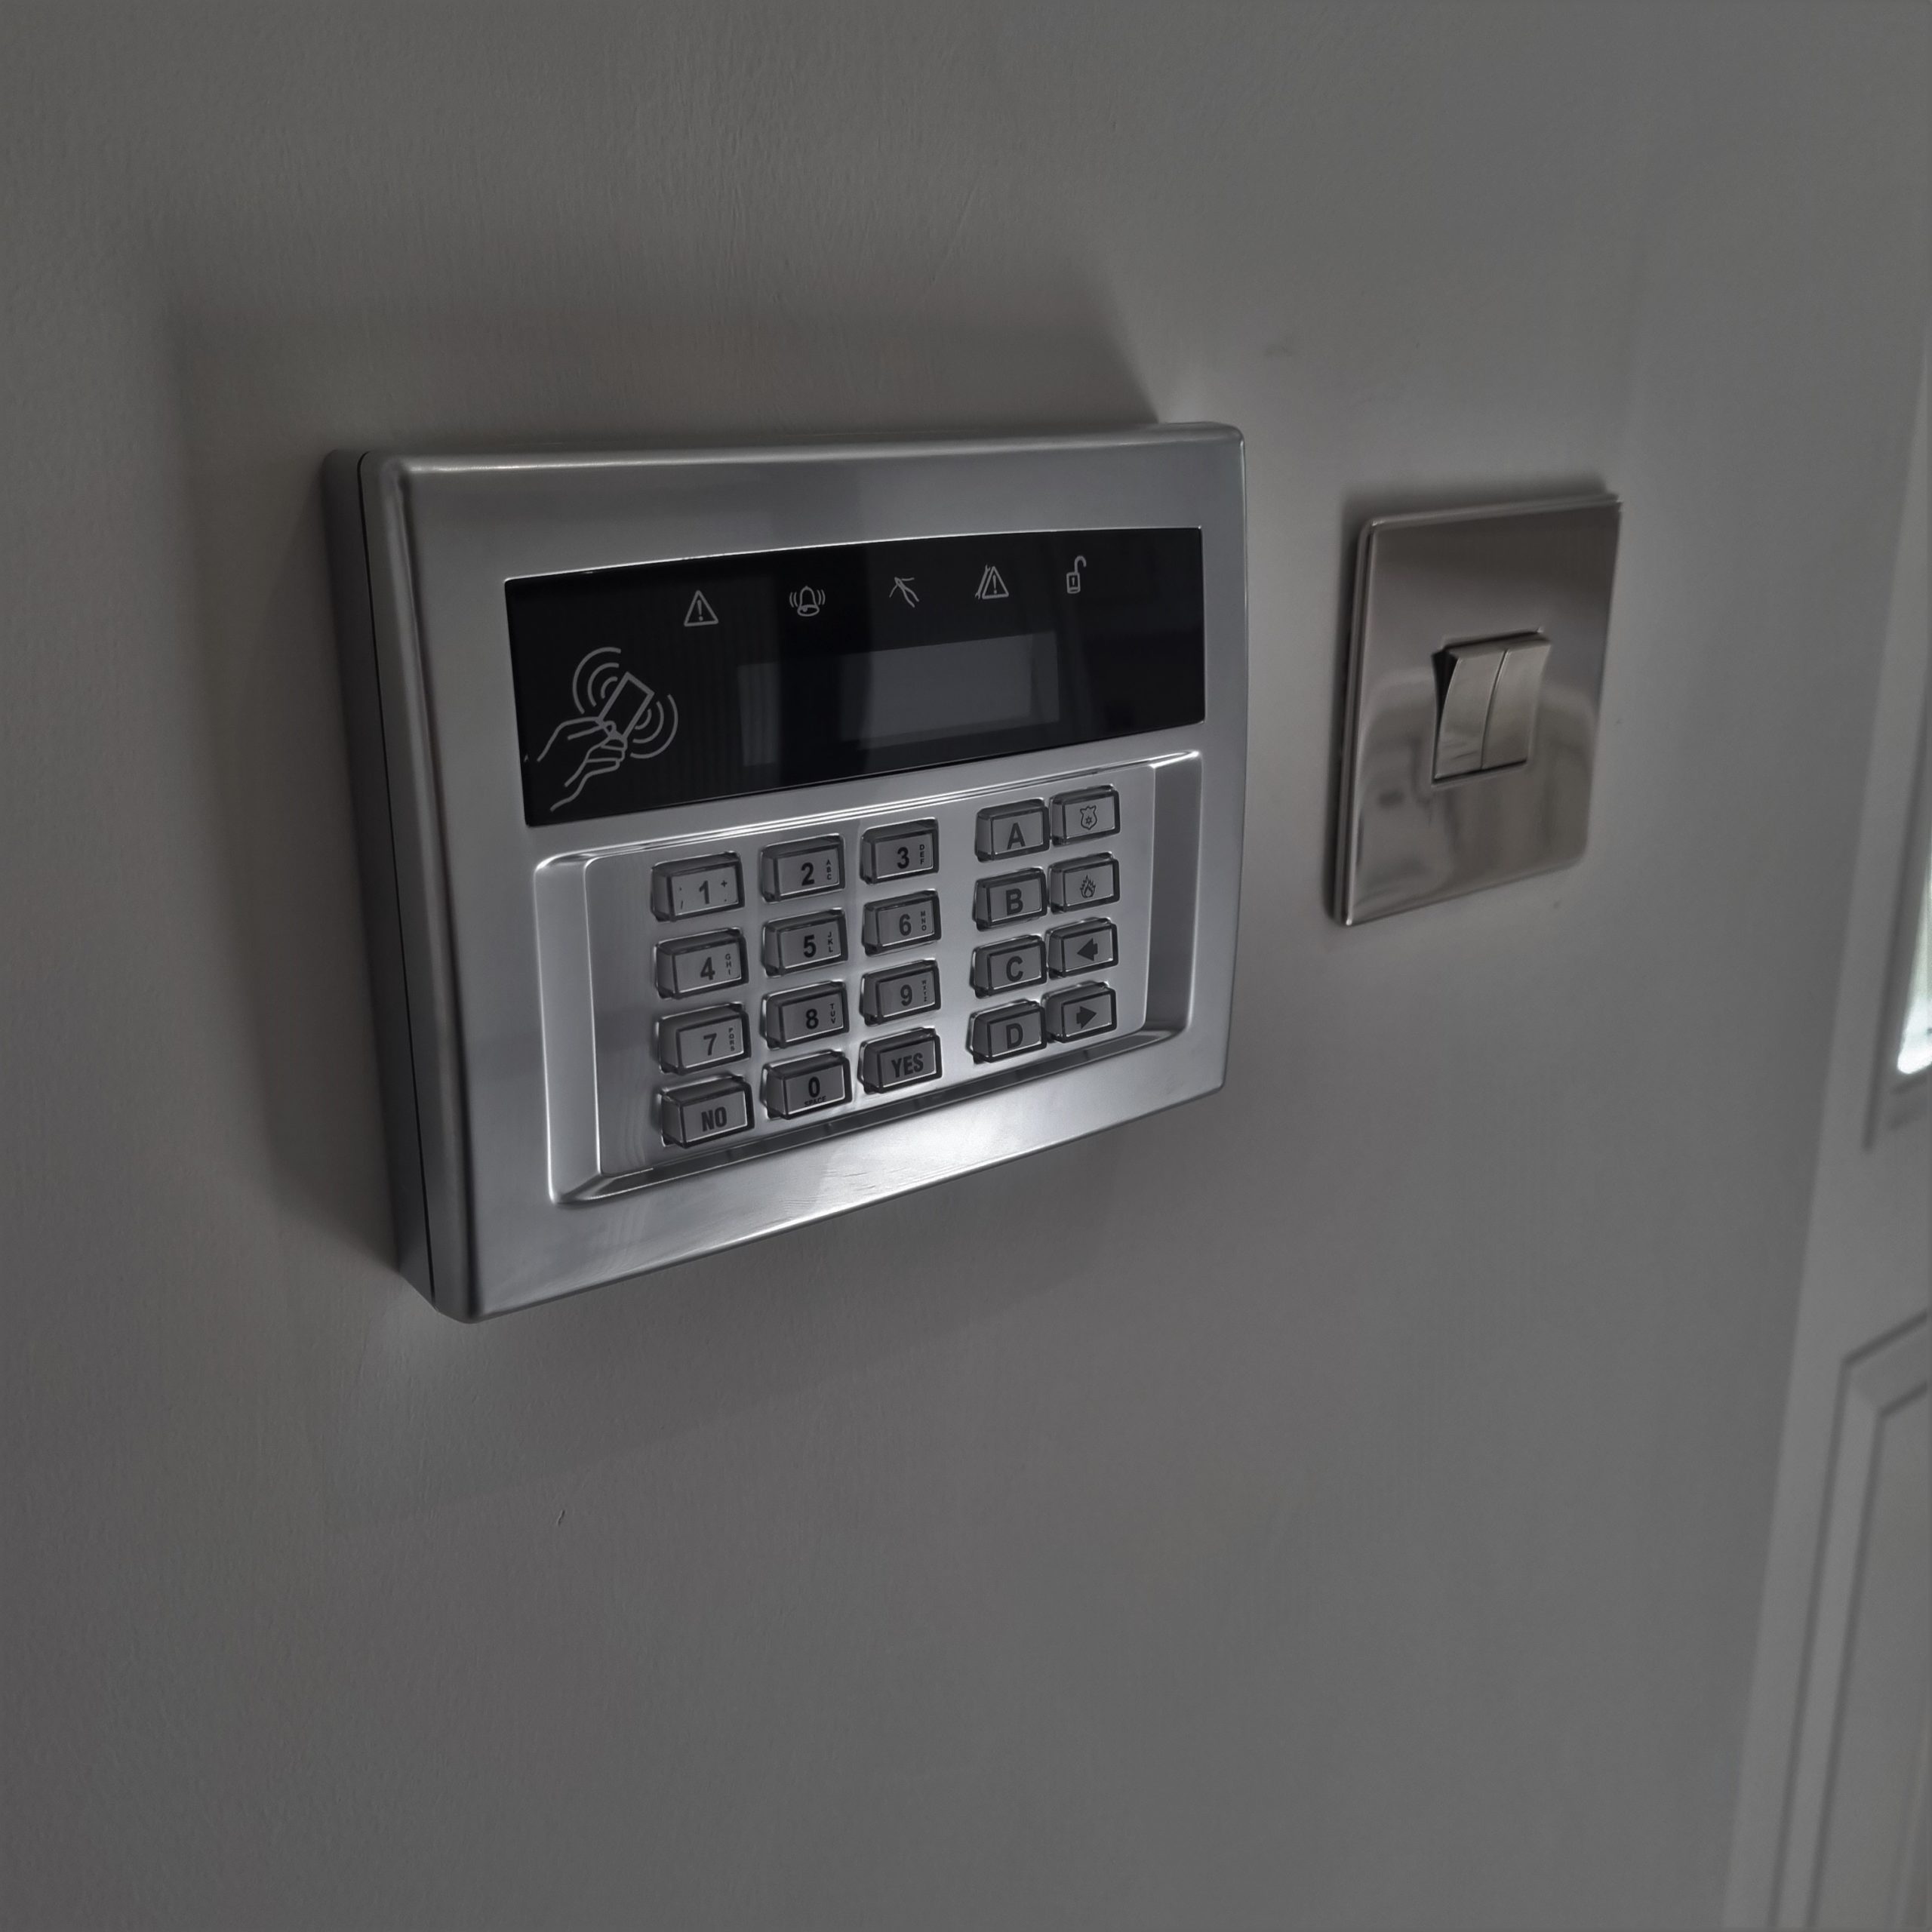 A chrome Flush mounted keypad for the intruder alarm system